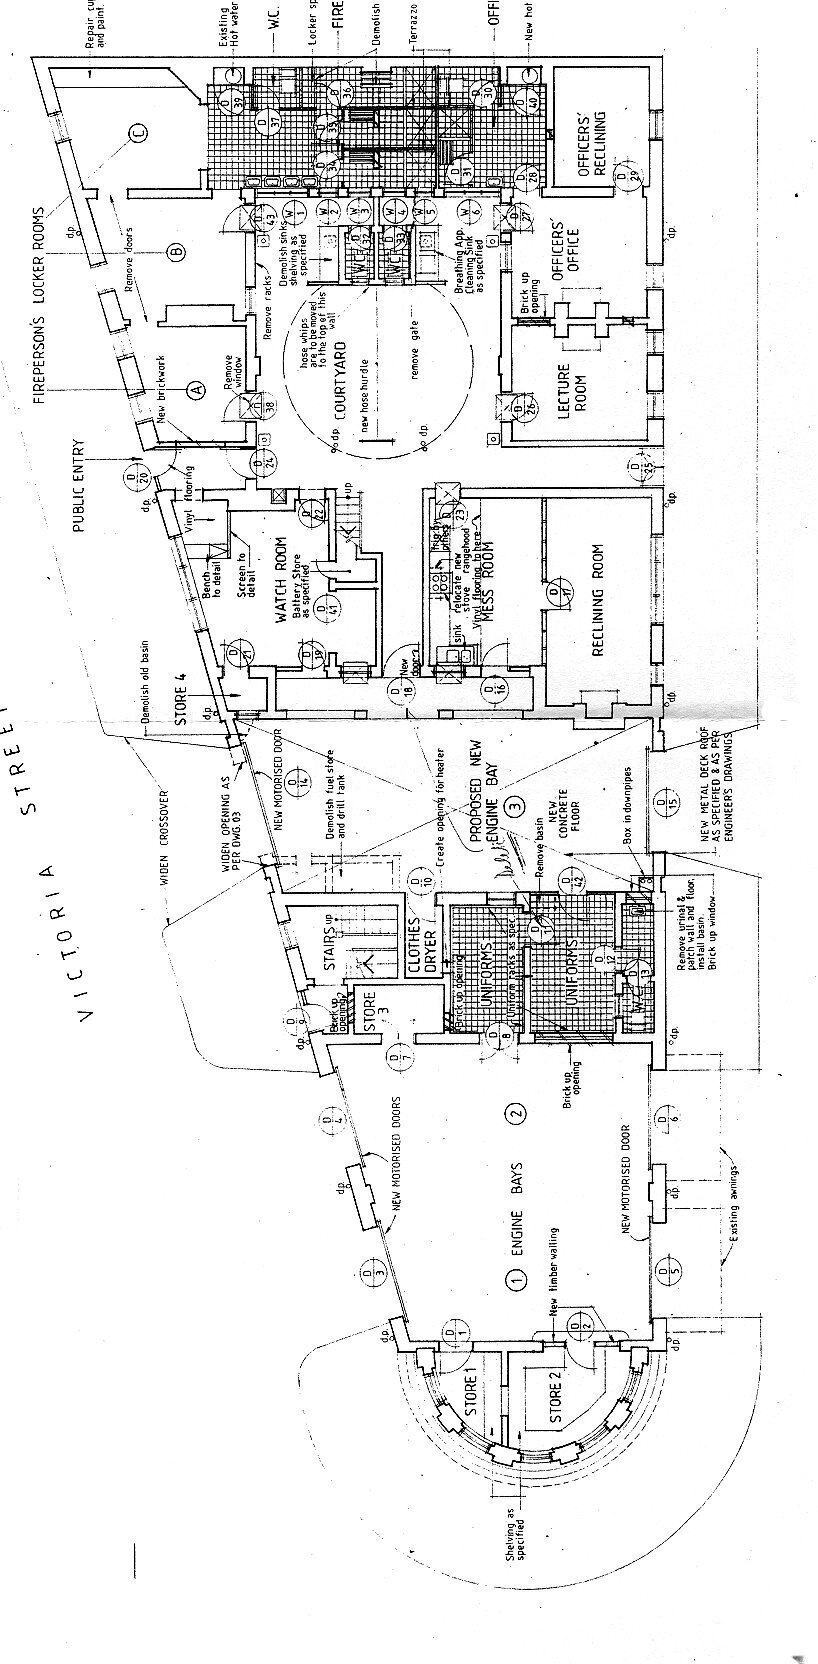 Darlinghurst Fire Station - Plan 1985